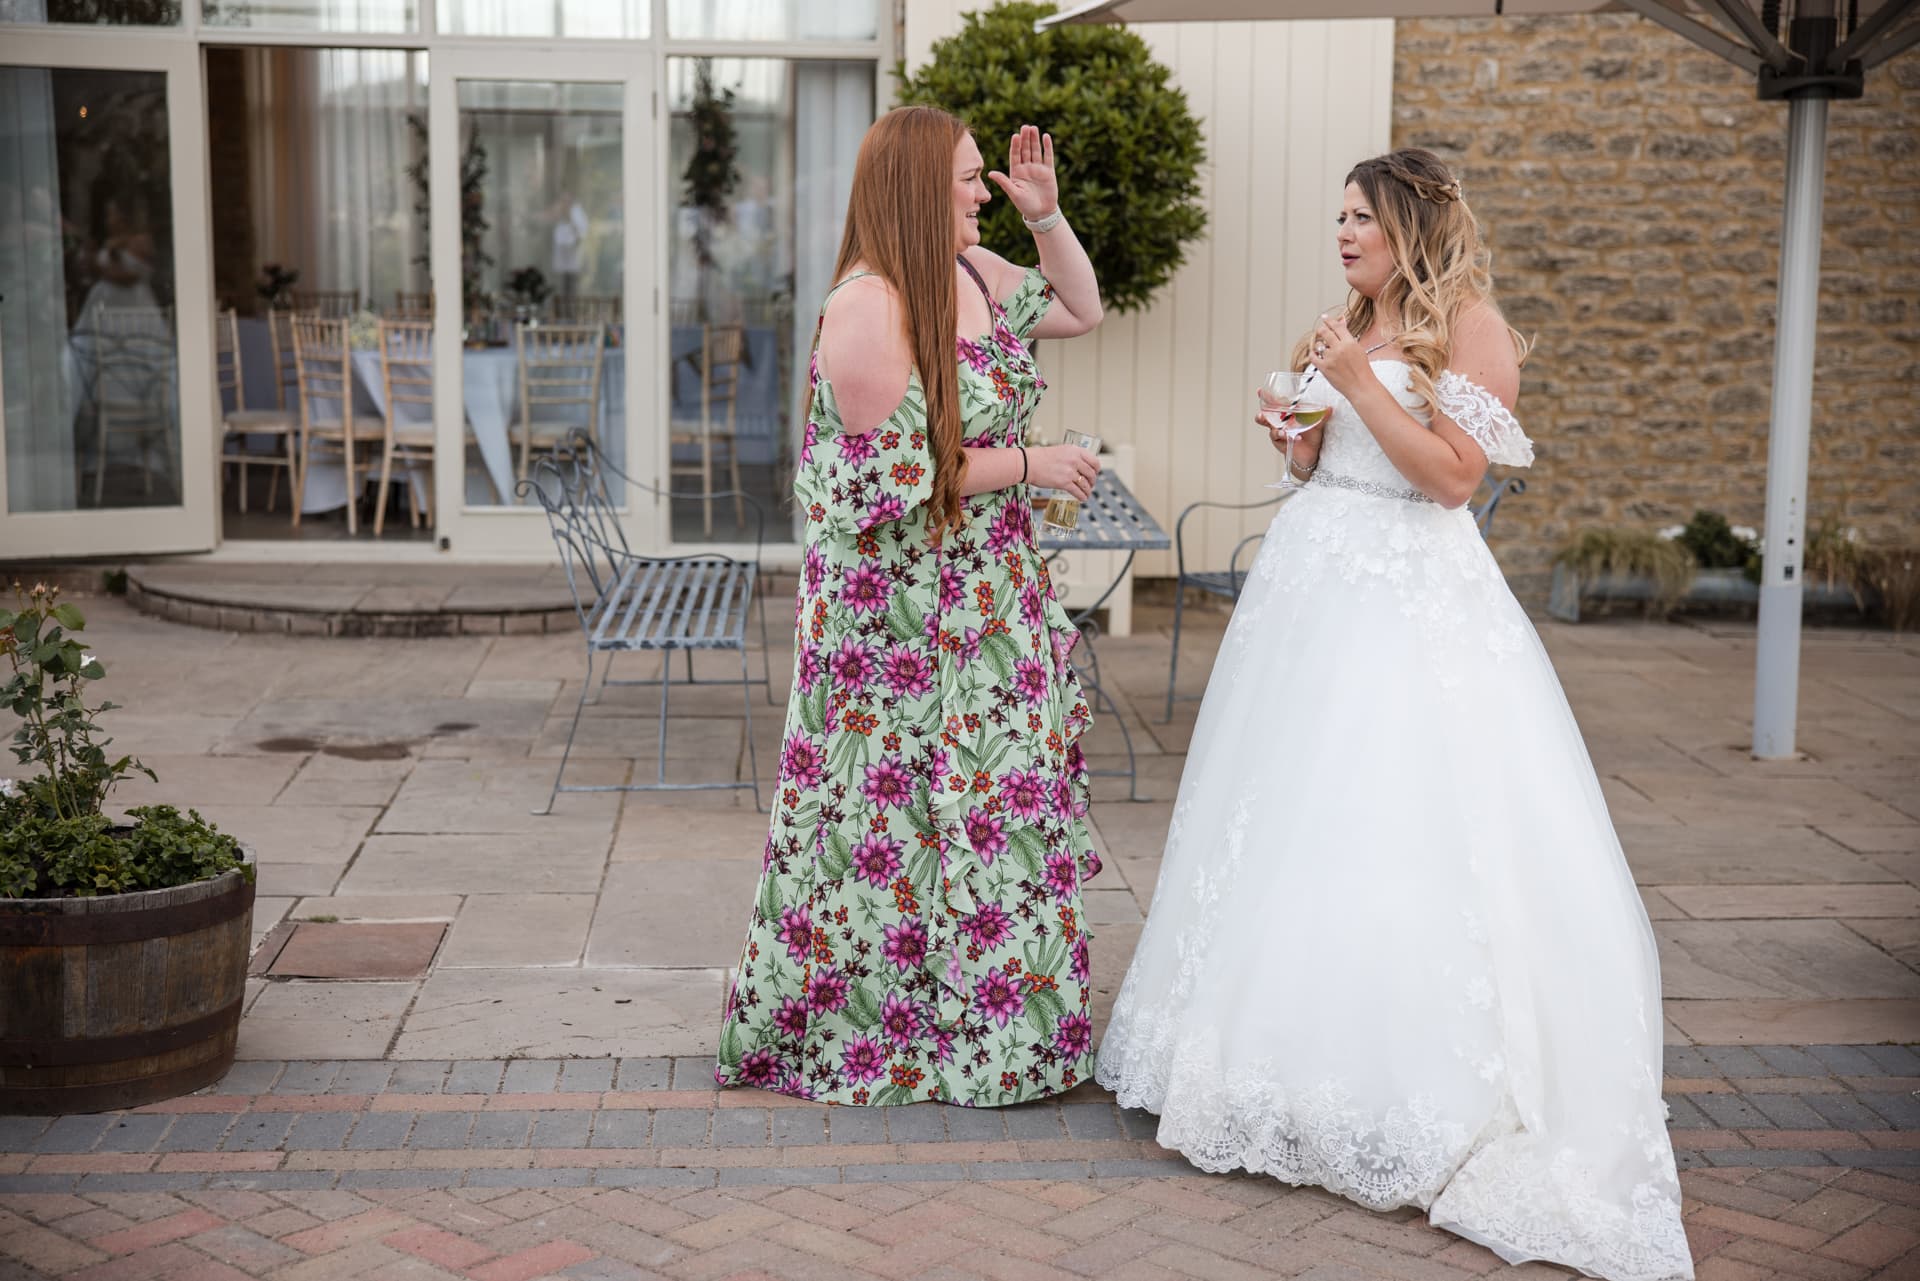 Bride talking to friend